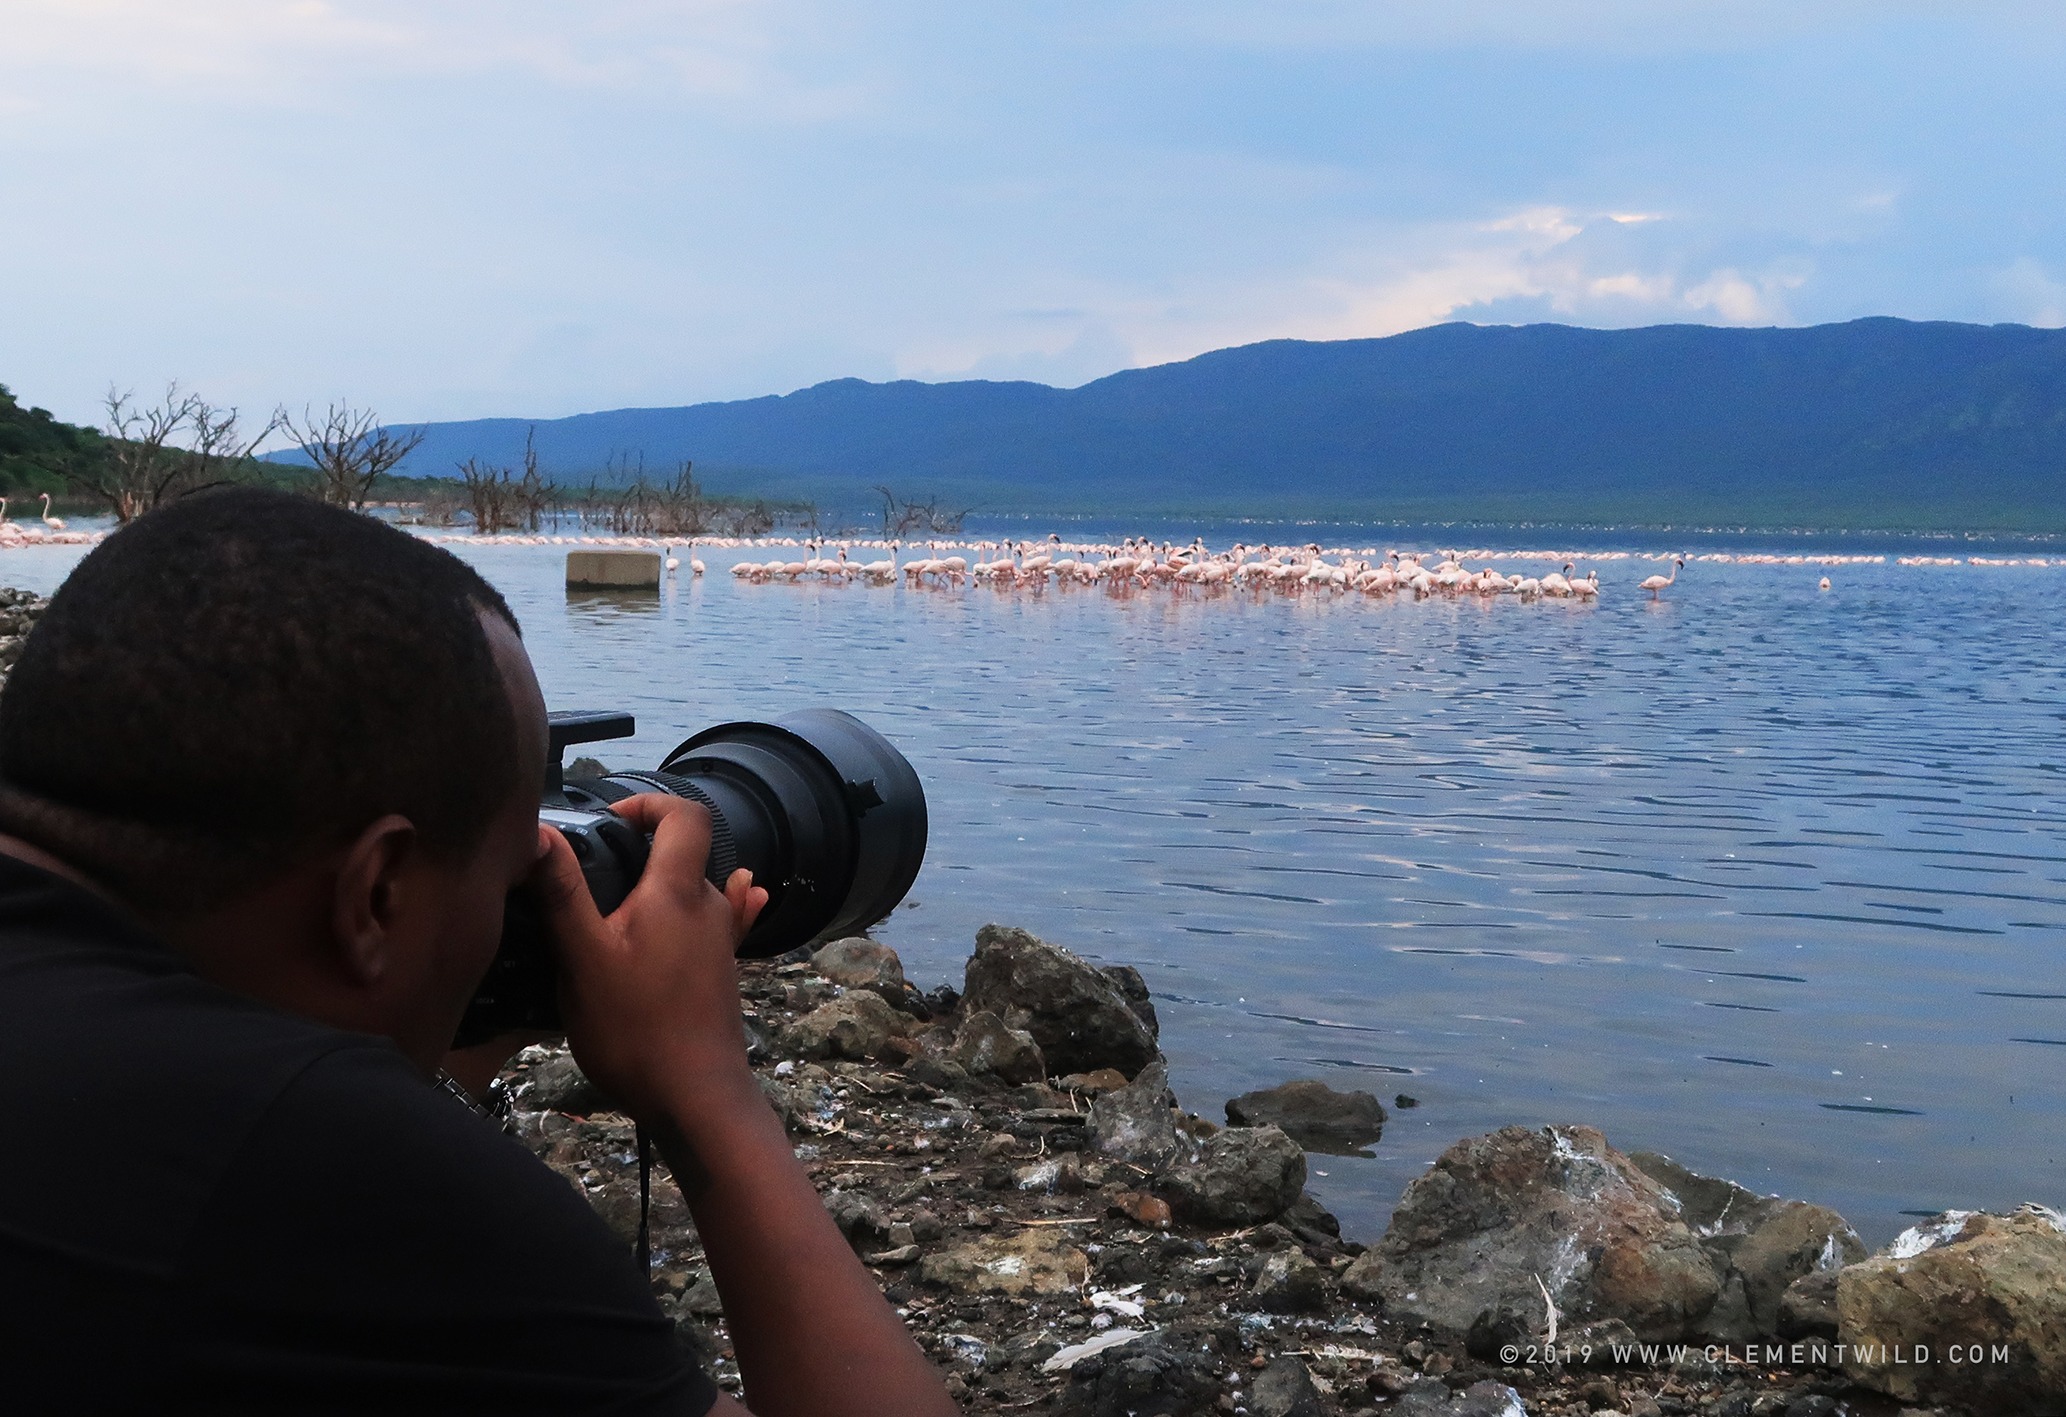 ClementWild tour leader demonstrates how to photograph flamingos in Kenya on his annual bird migration photo safari